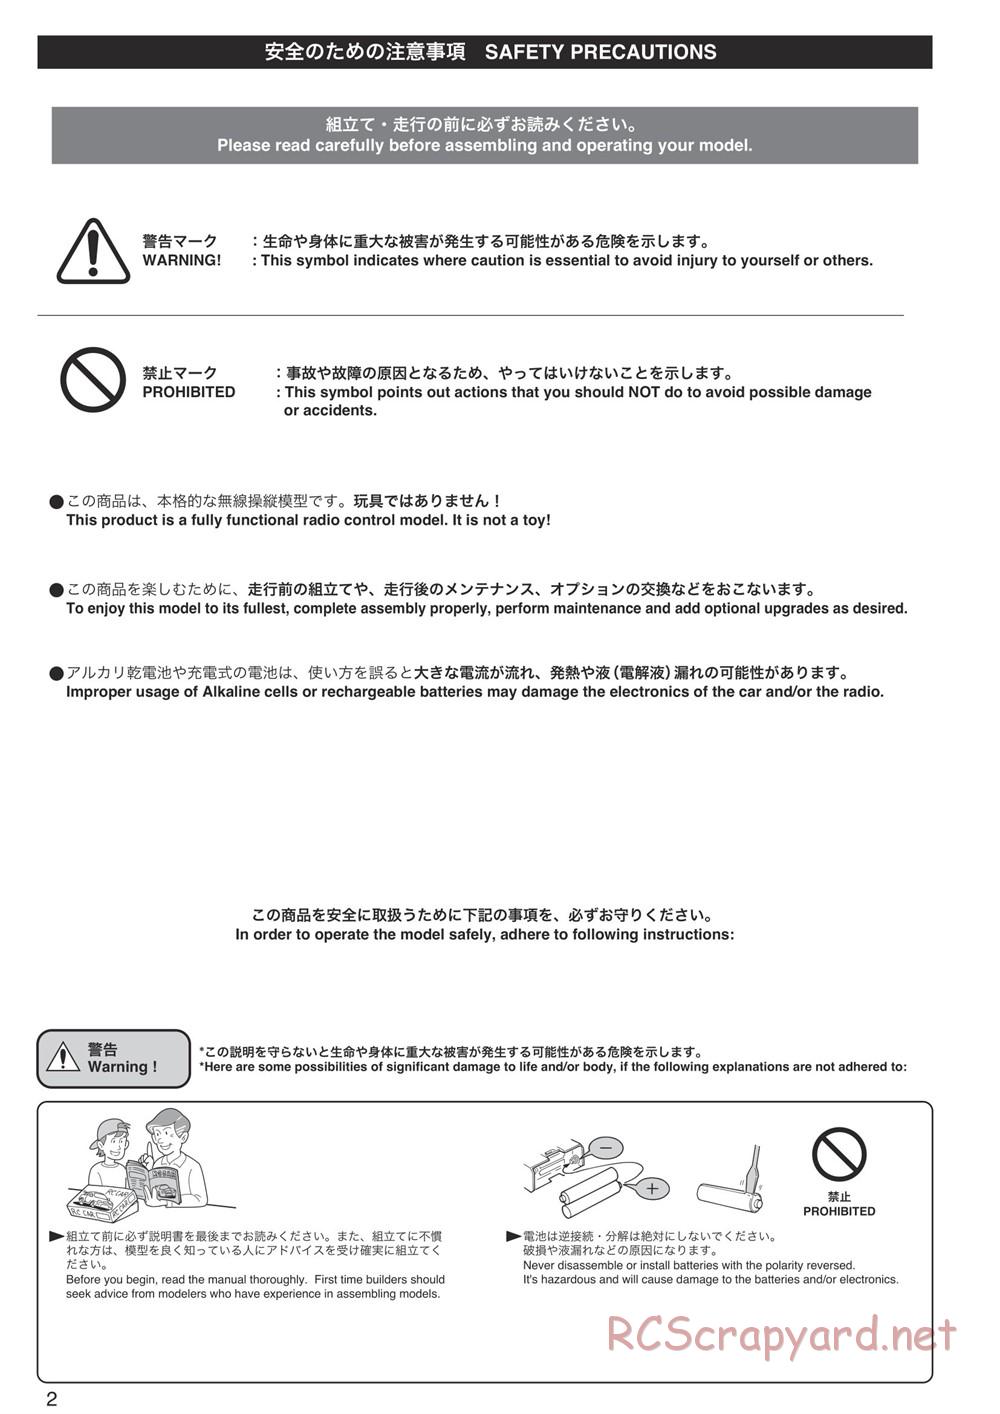 Kyosho - Ultima SCR - Manual - Page 2